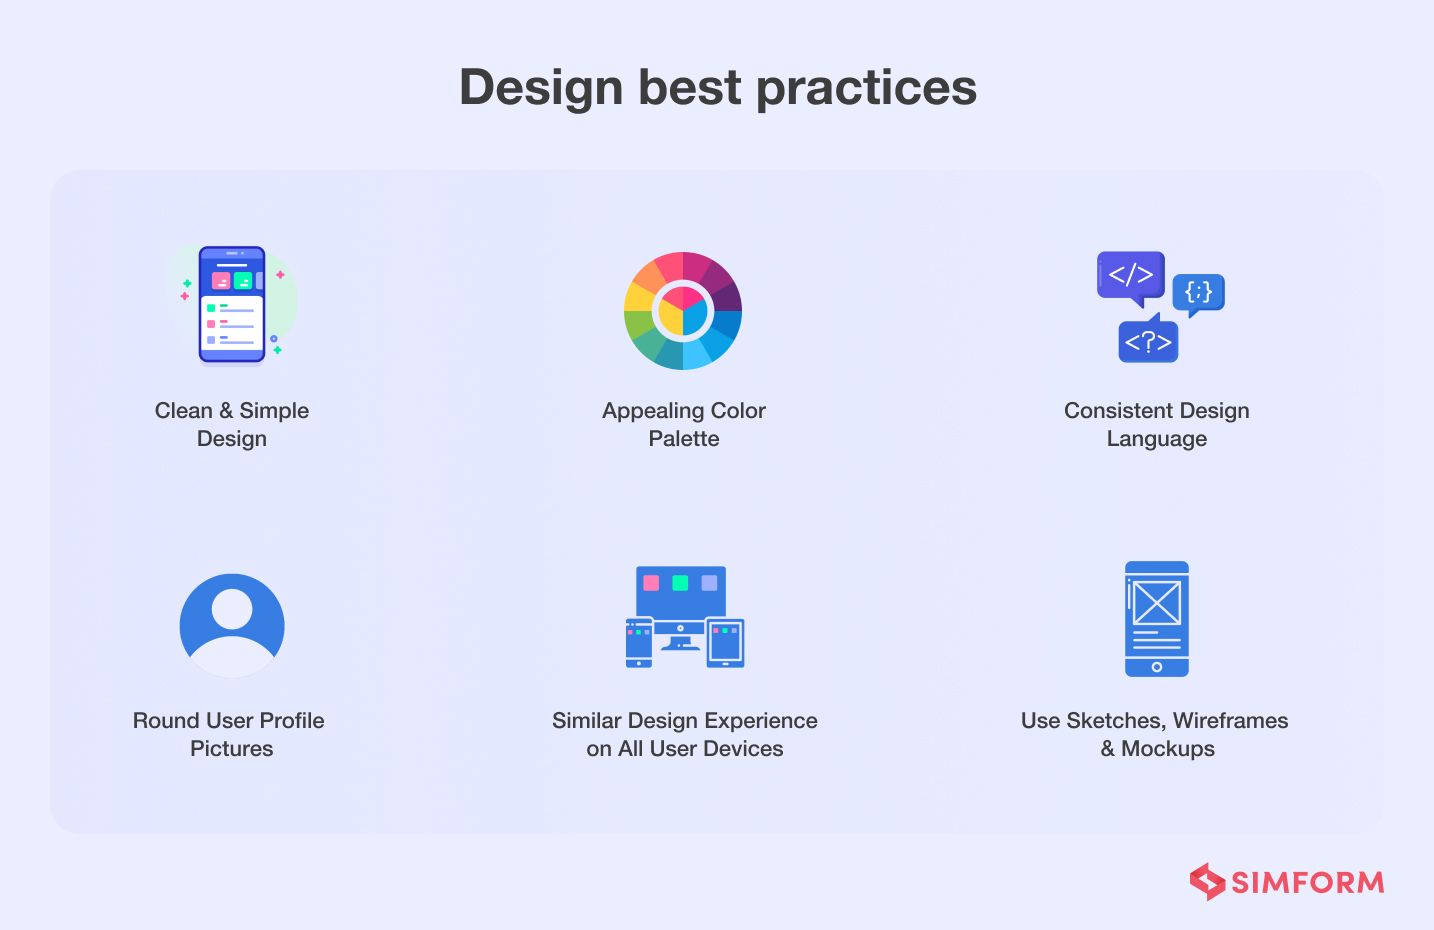 design best practices for social media app